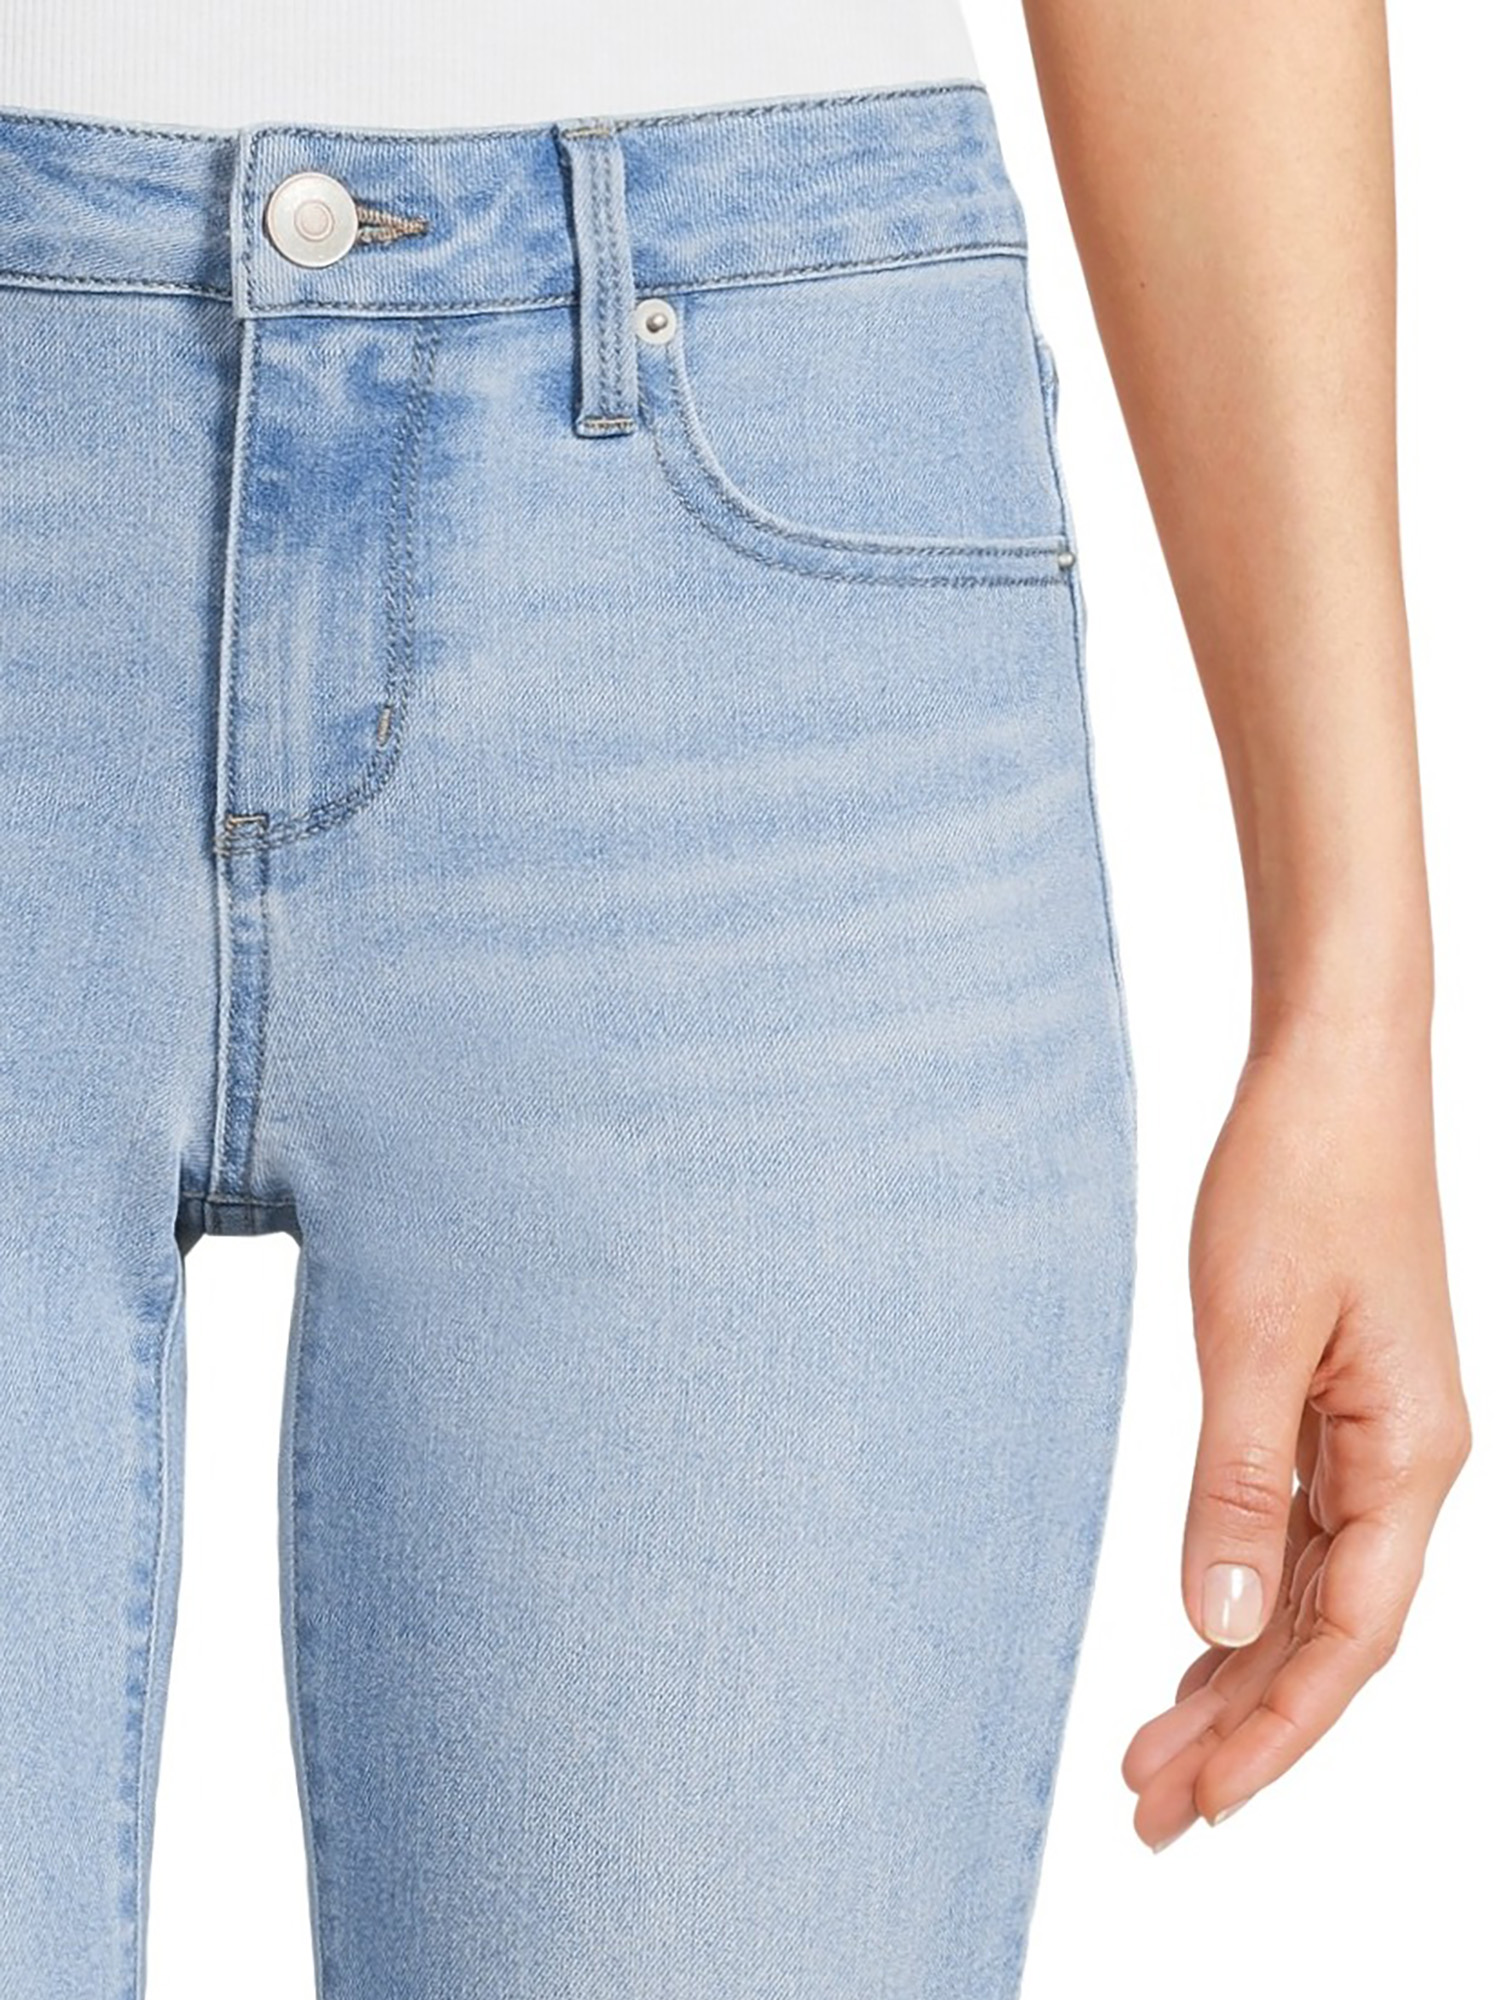 No Boundaries Juniors Mid Rise Bootcut Jeans, Sizes 1-21 - Walmart.com